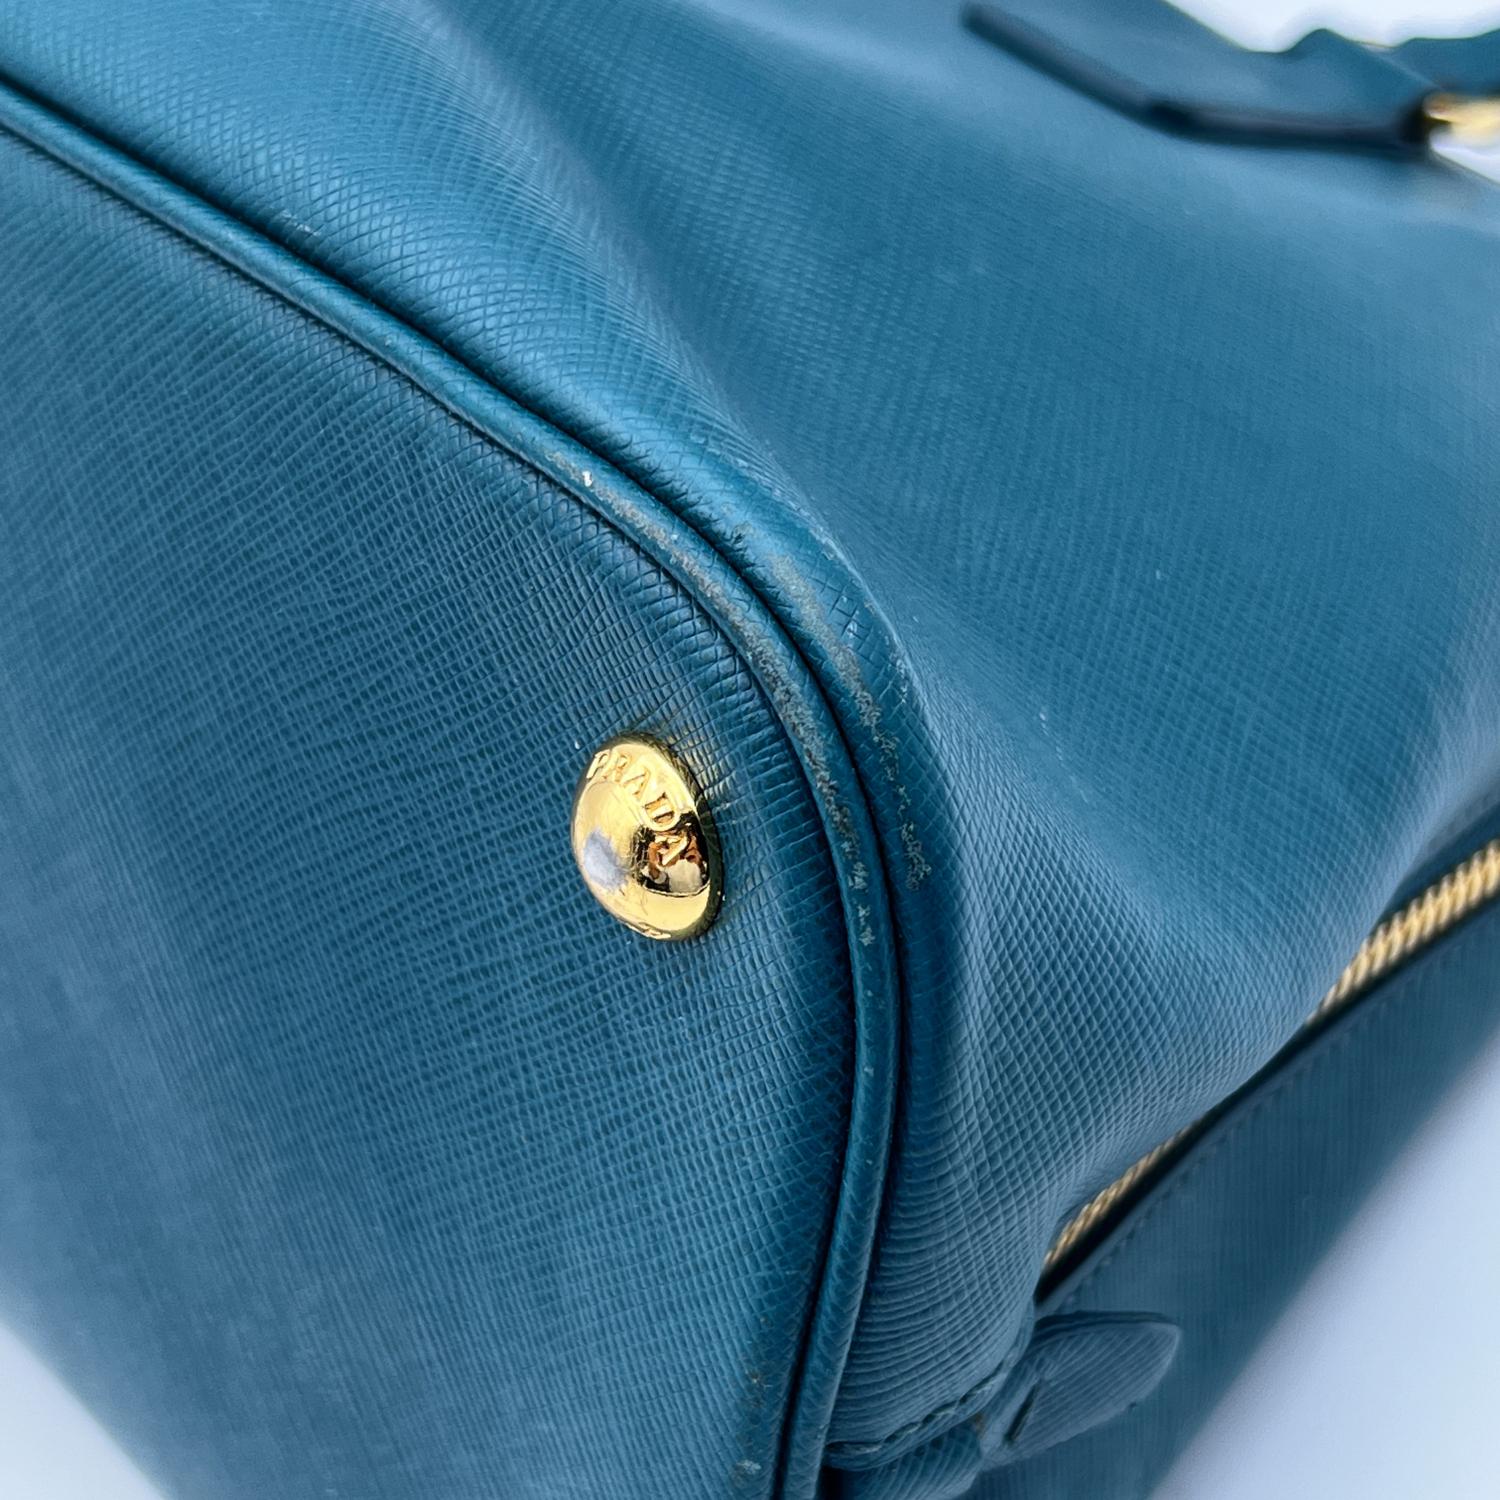 Prada Teal Saffiano Leather Promenade Tote Satchel Bag Handbag 3